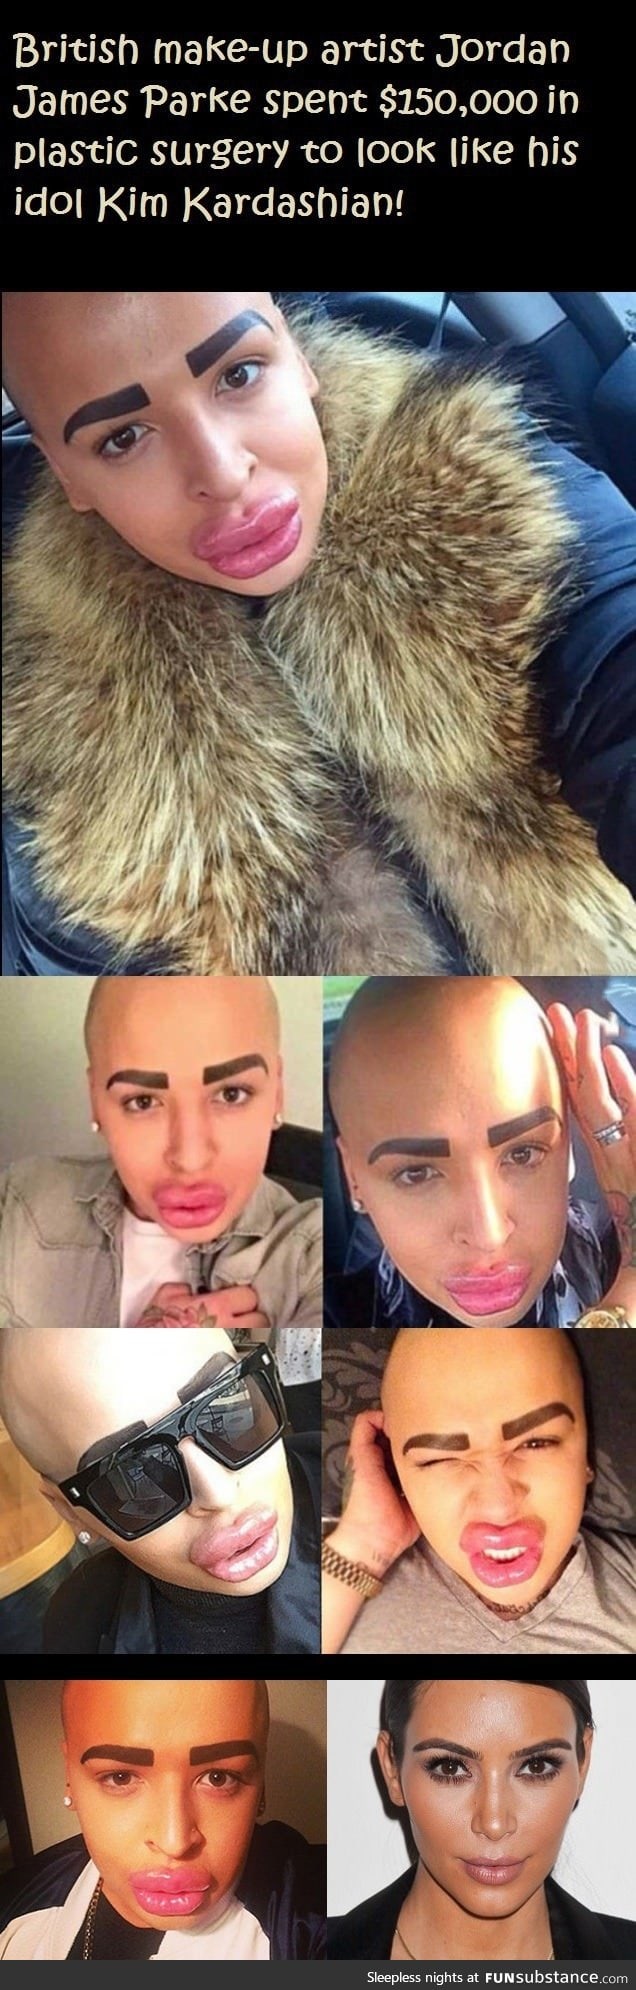 Guy spends $150,000 in plastic surgery to look like Kim Kardashian